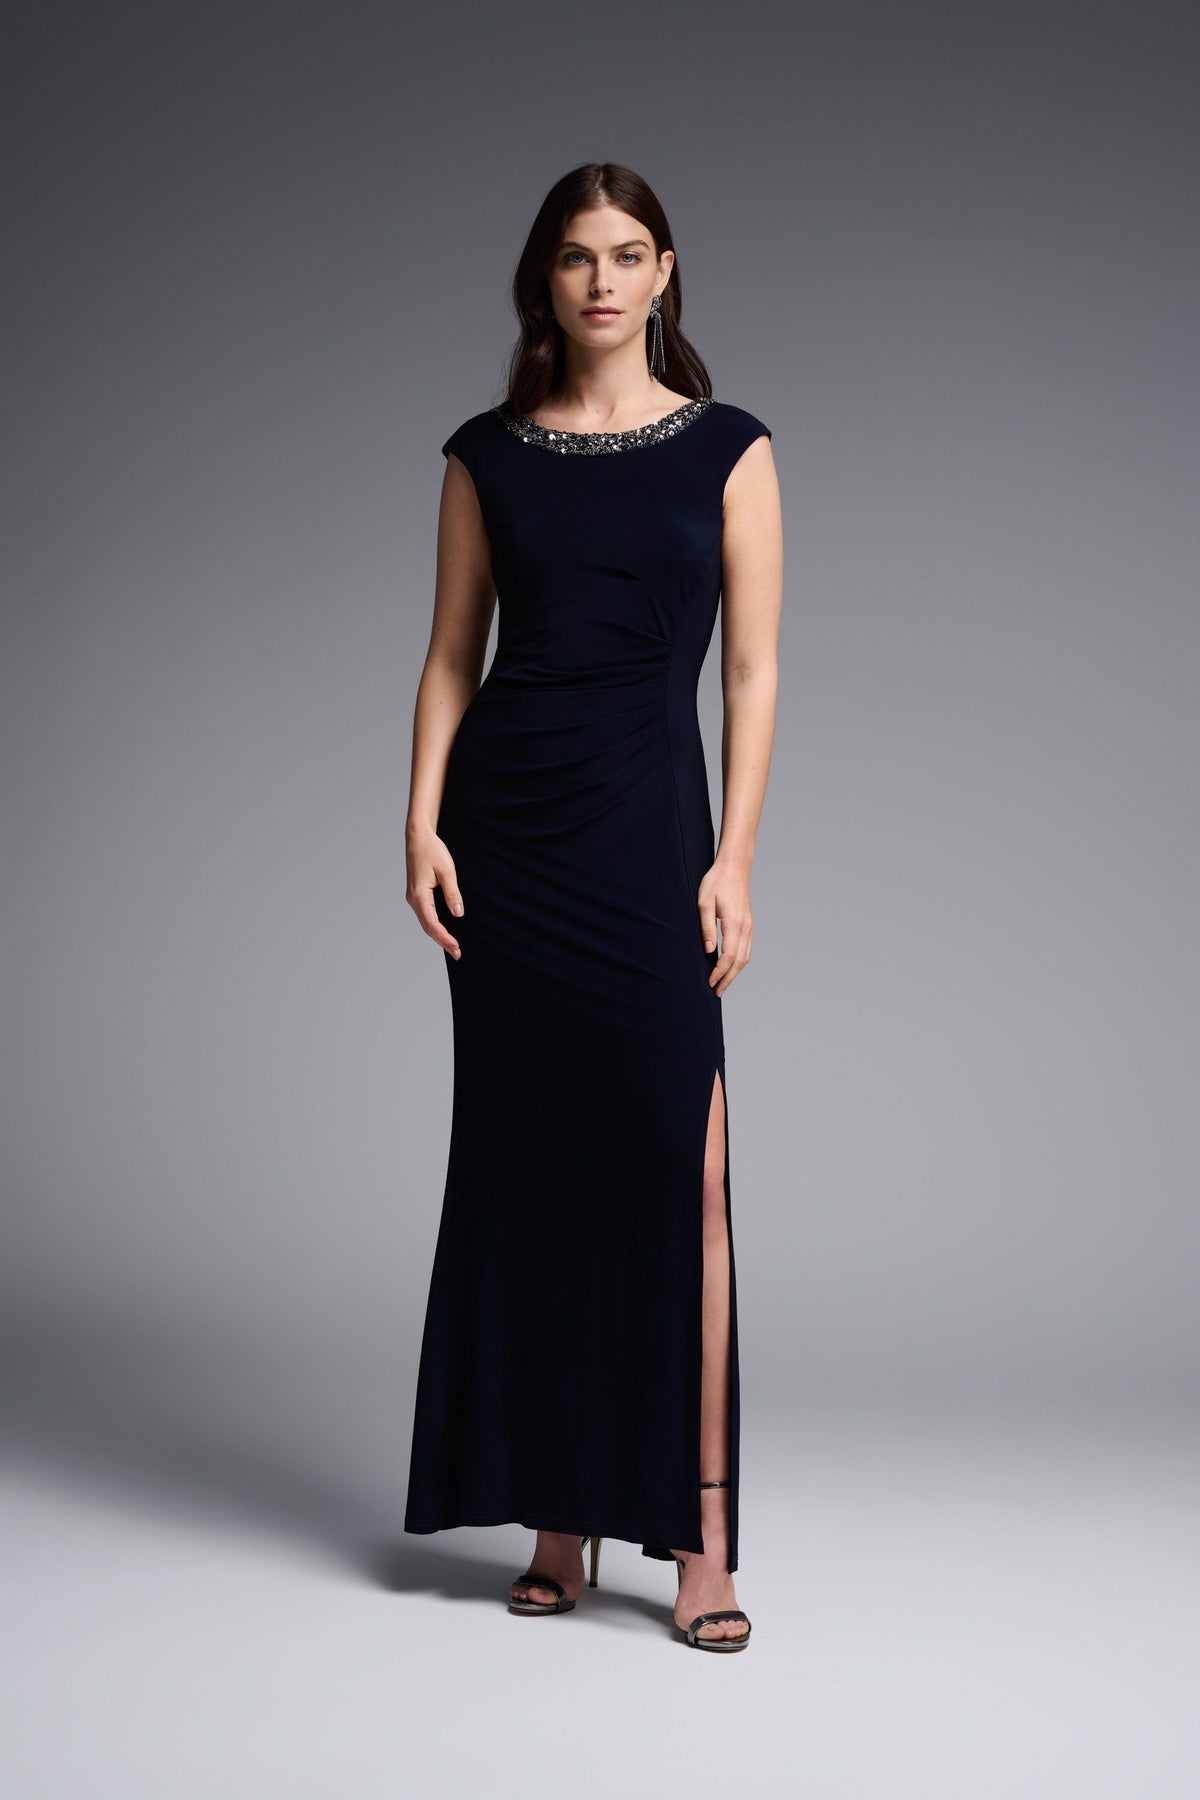 Joseph Ribkoff Signature Embellished Neckline Dress - Style 231709, front